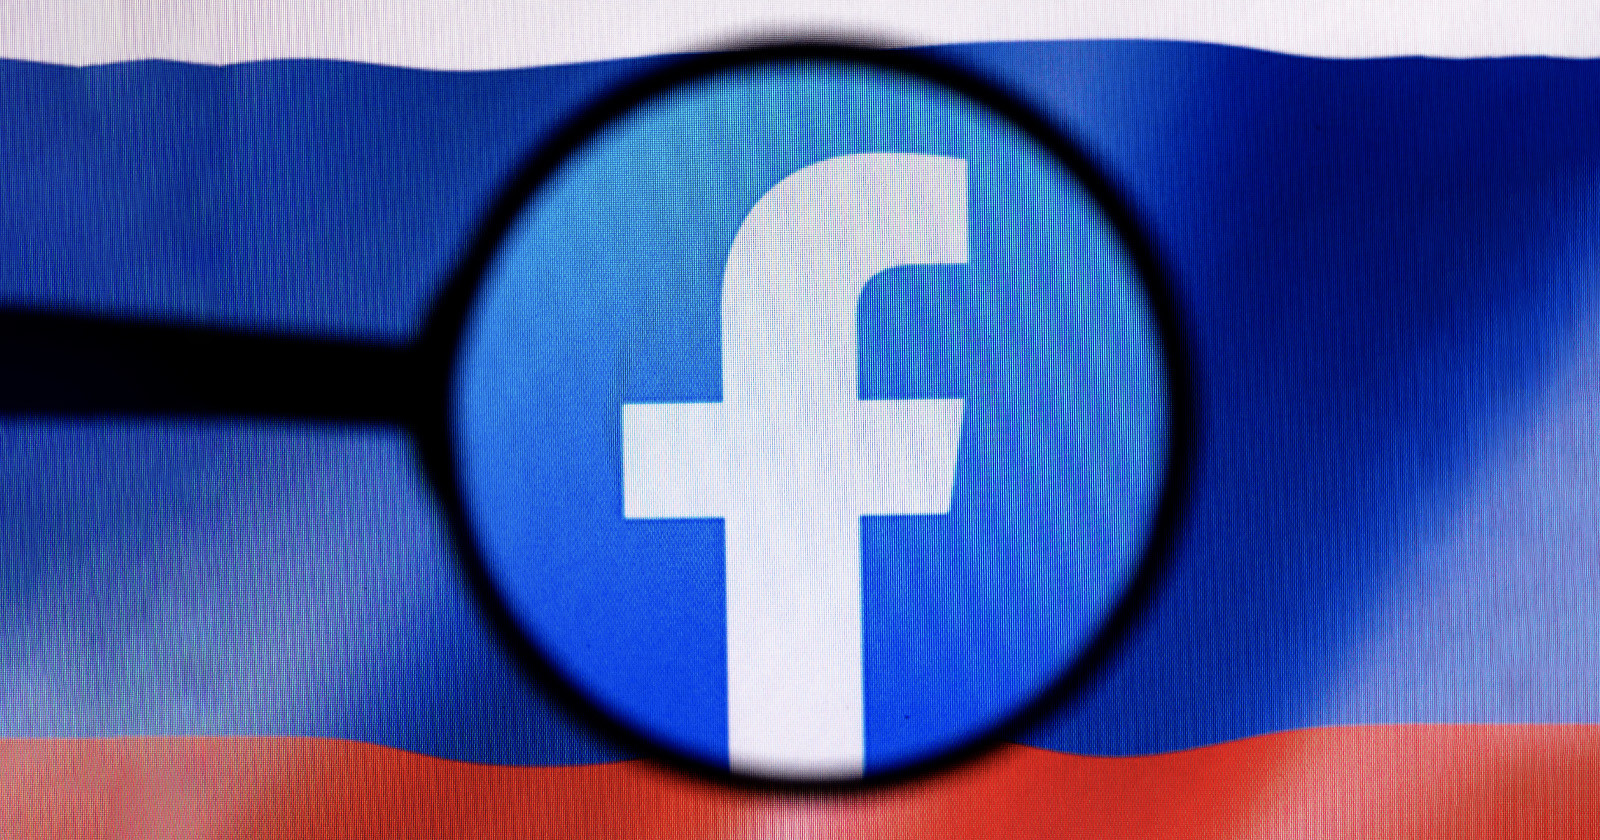  russia has blocked access facebook update twitter 